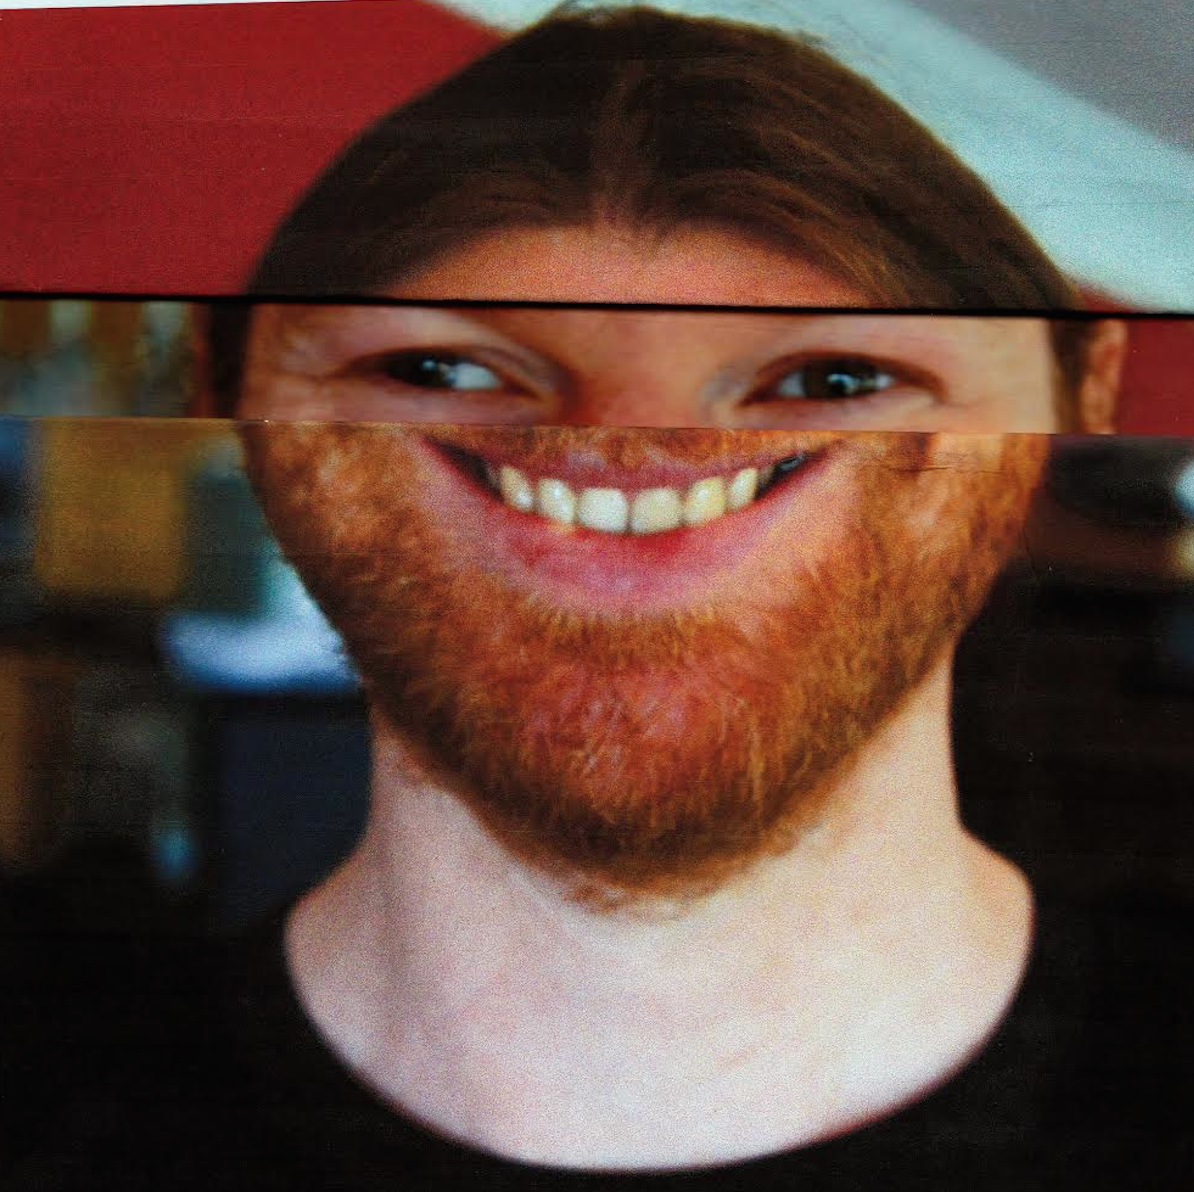 Aphex Twin - Syro